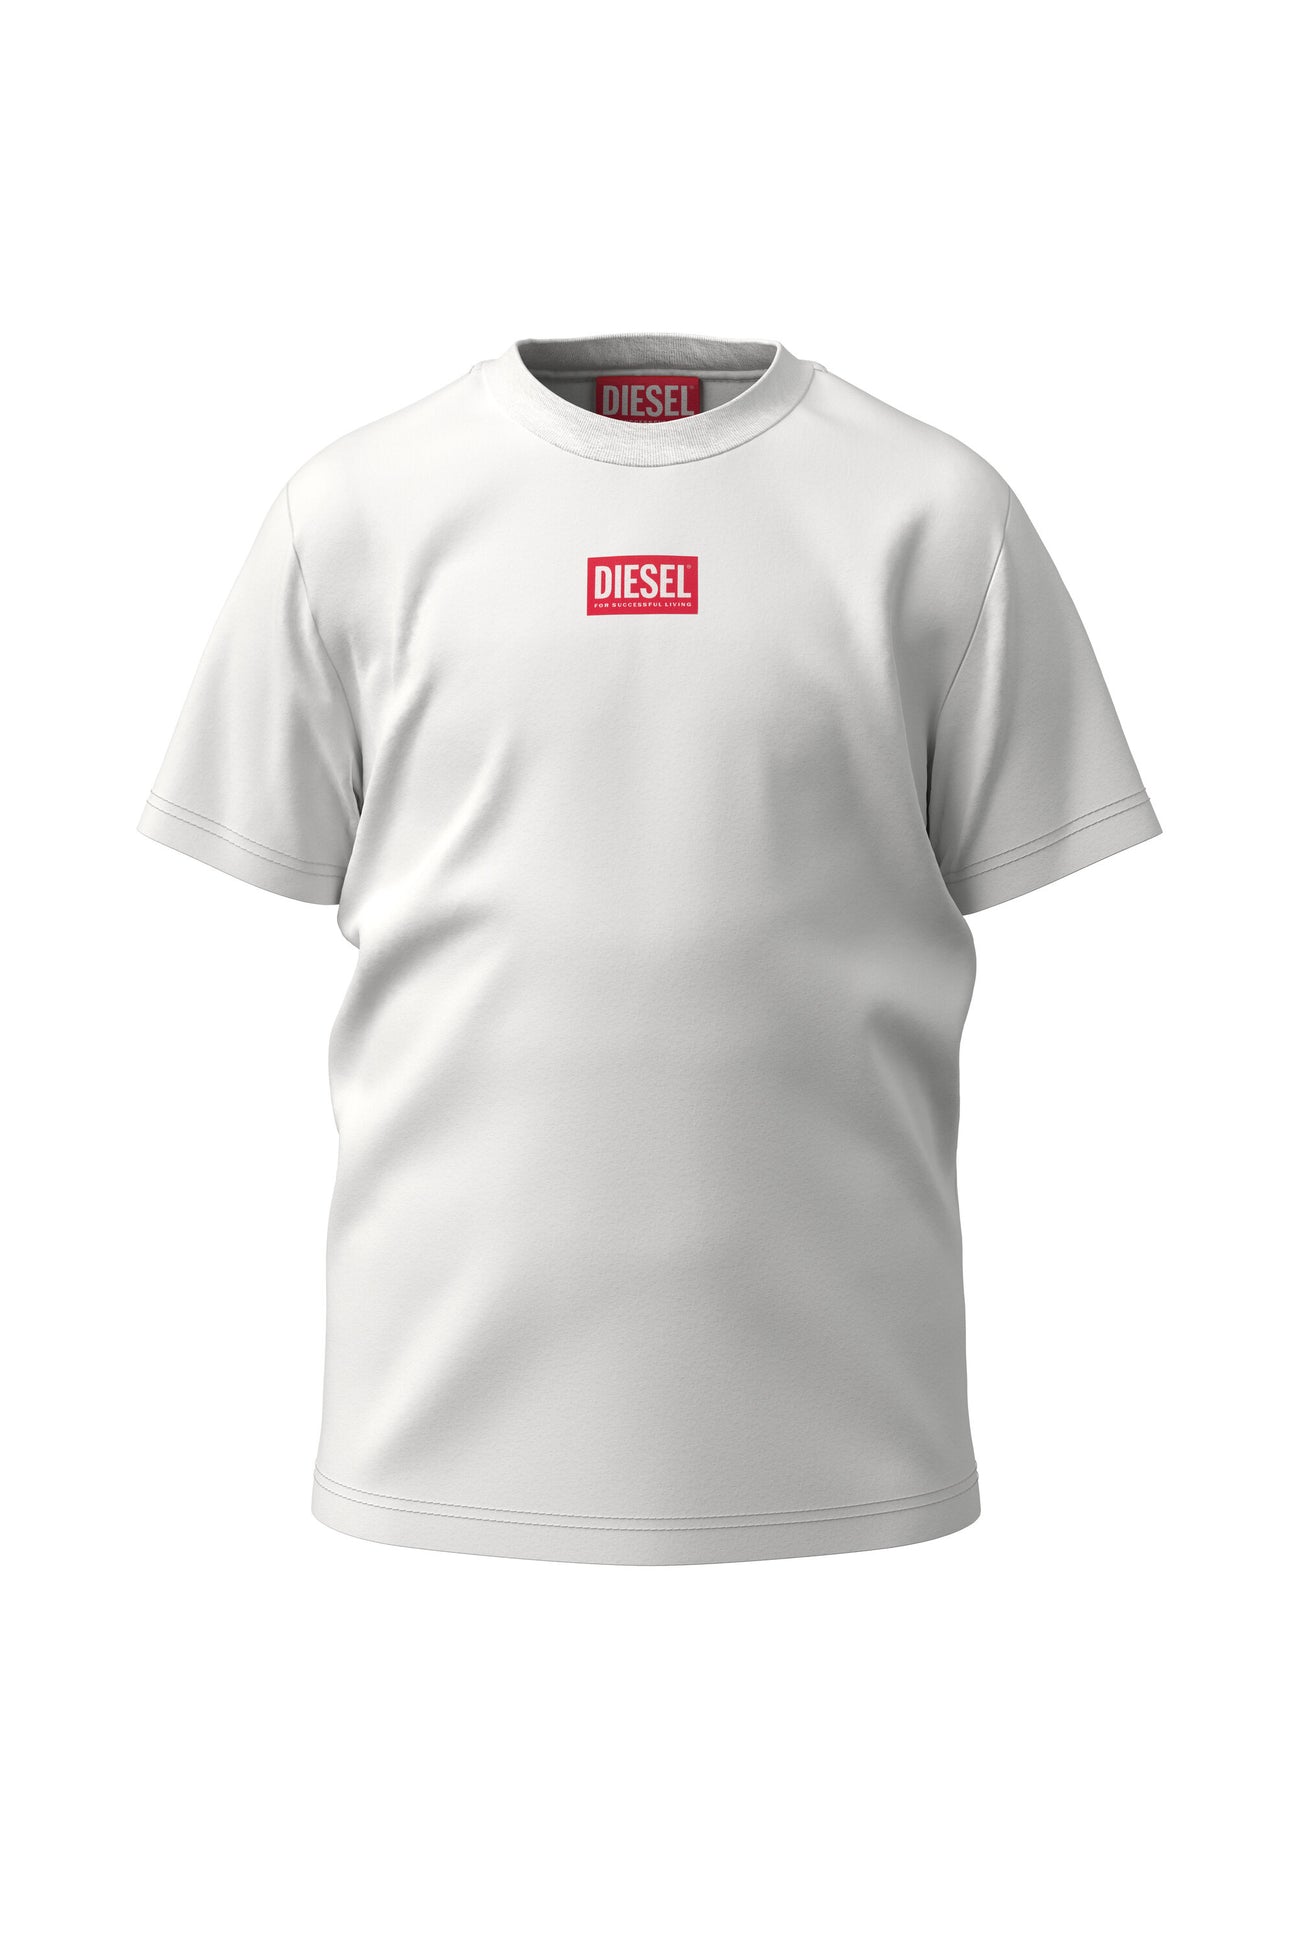 White jersey undershirt with logo 